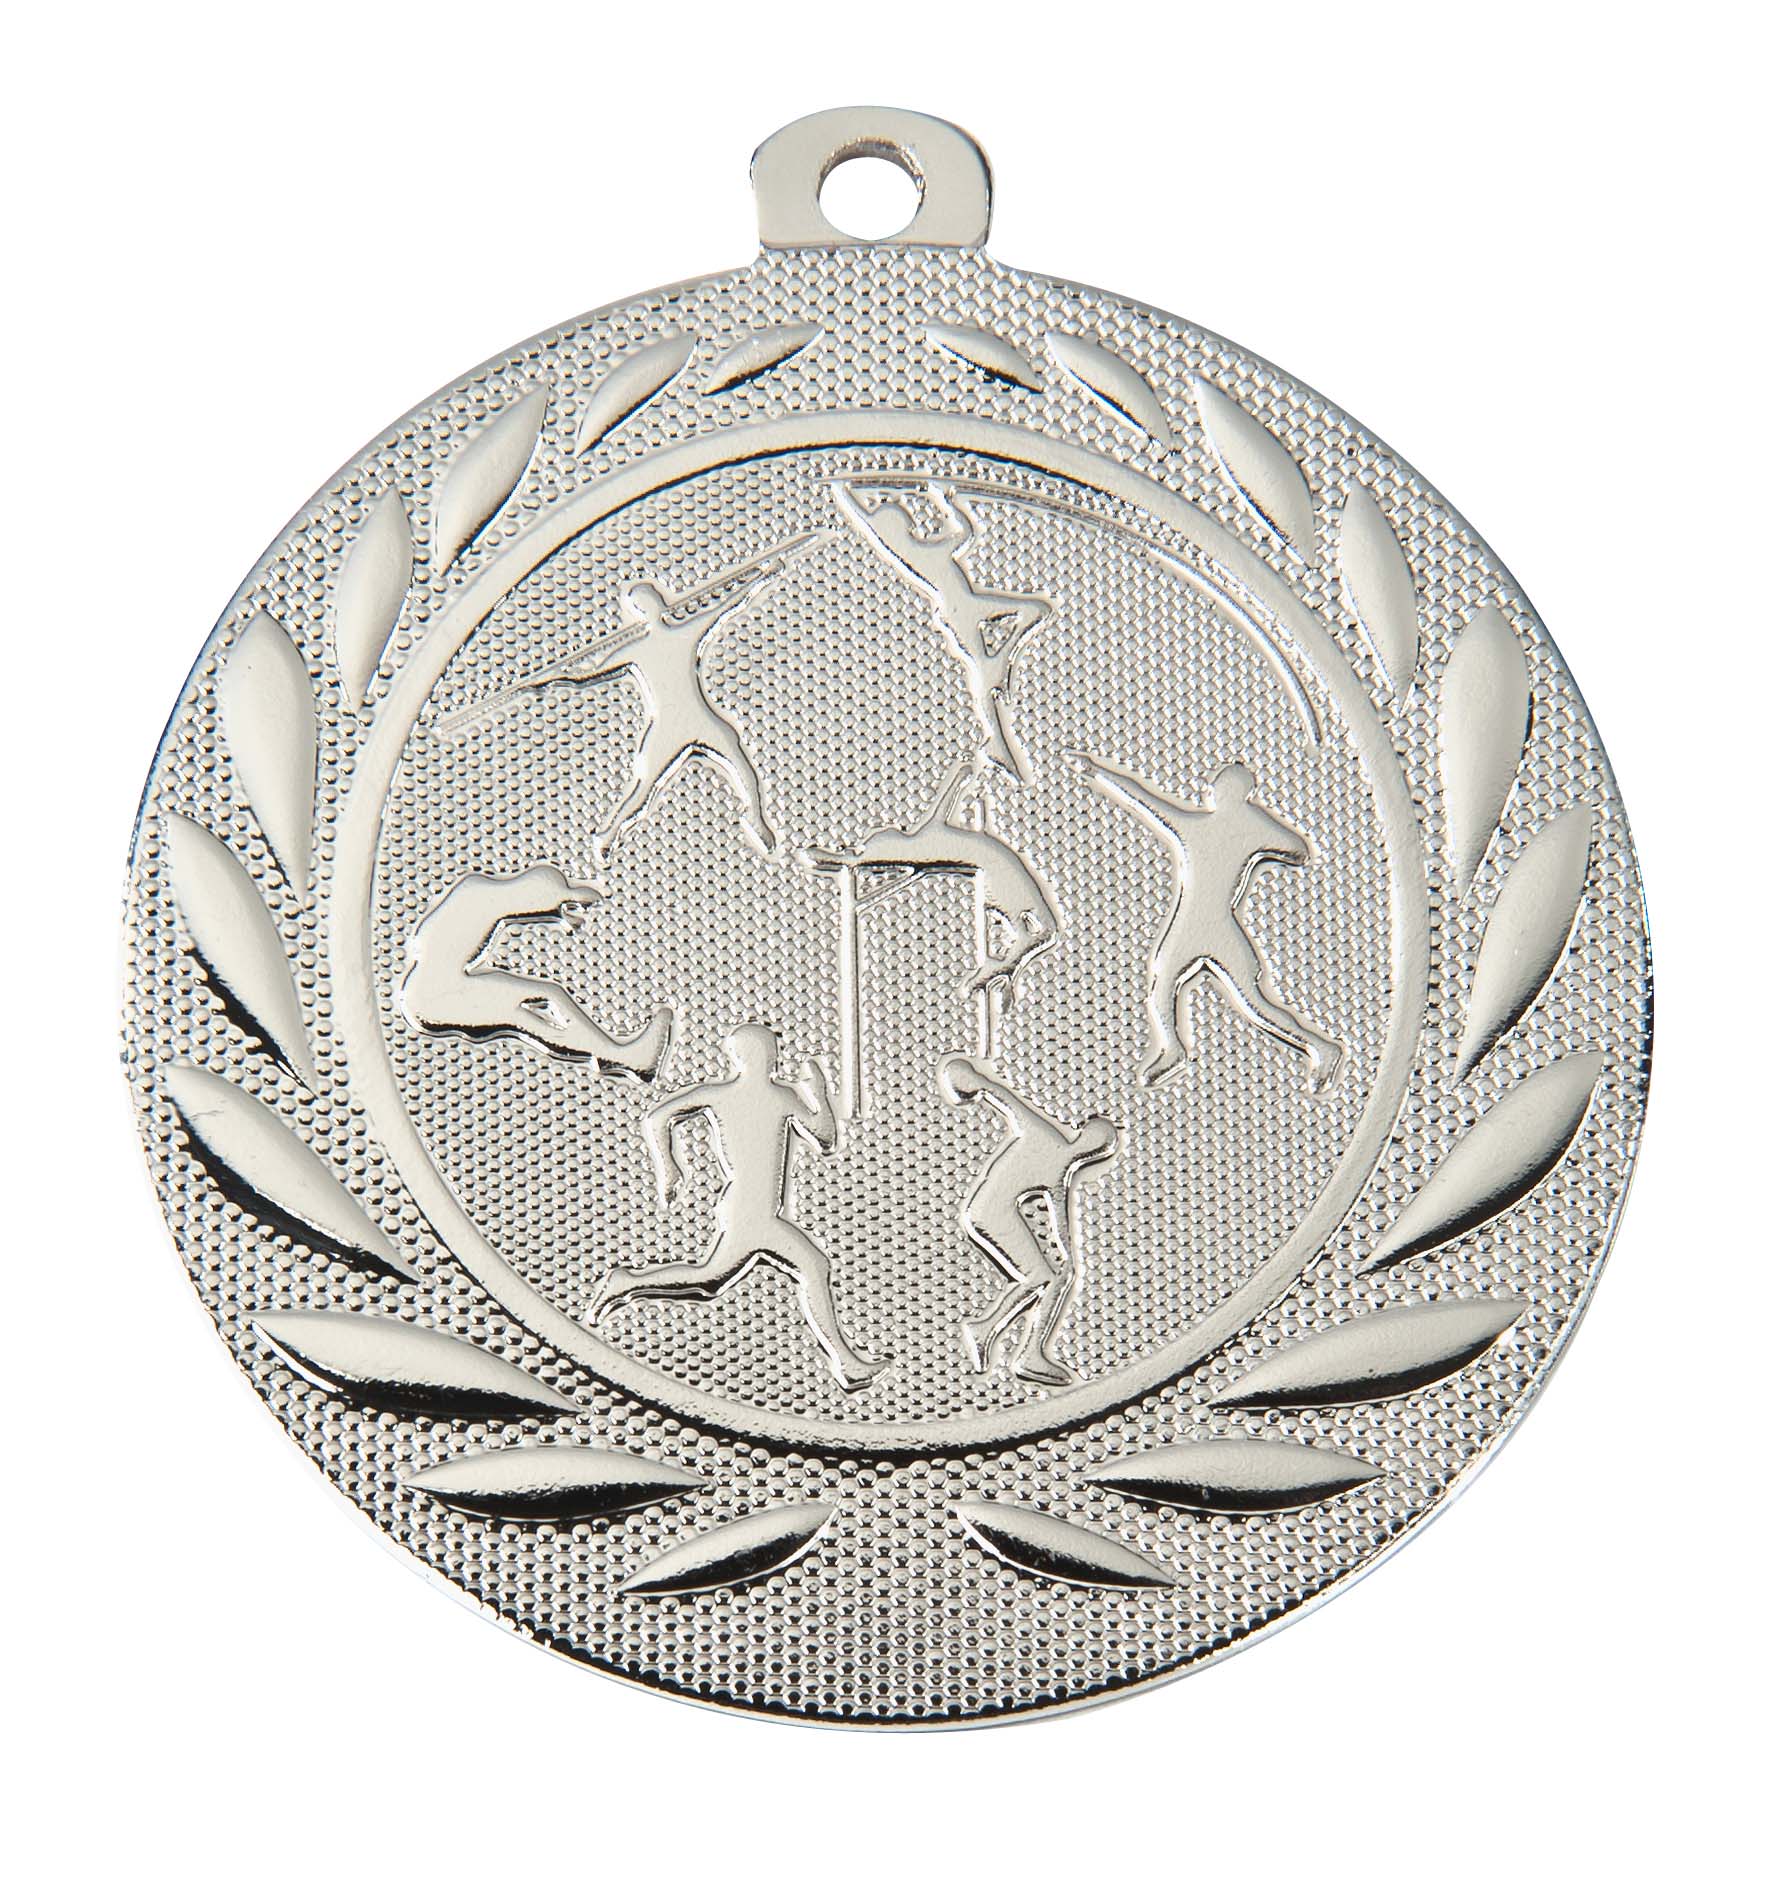 Leichtathletik-Medaille DI5000K inkl. Band und Beschriftung Silber Fertig montiert gegen Aufpreis